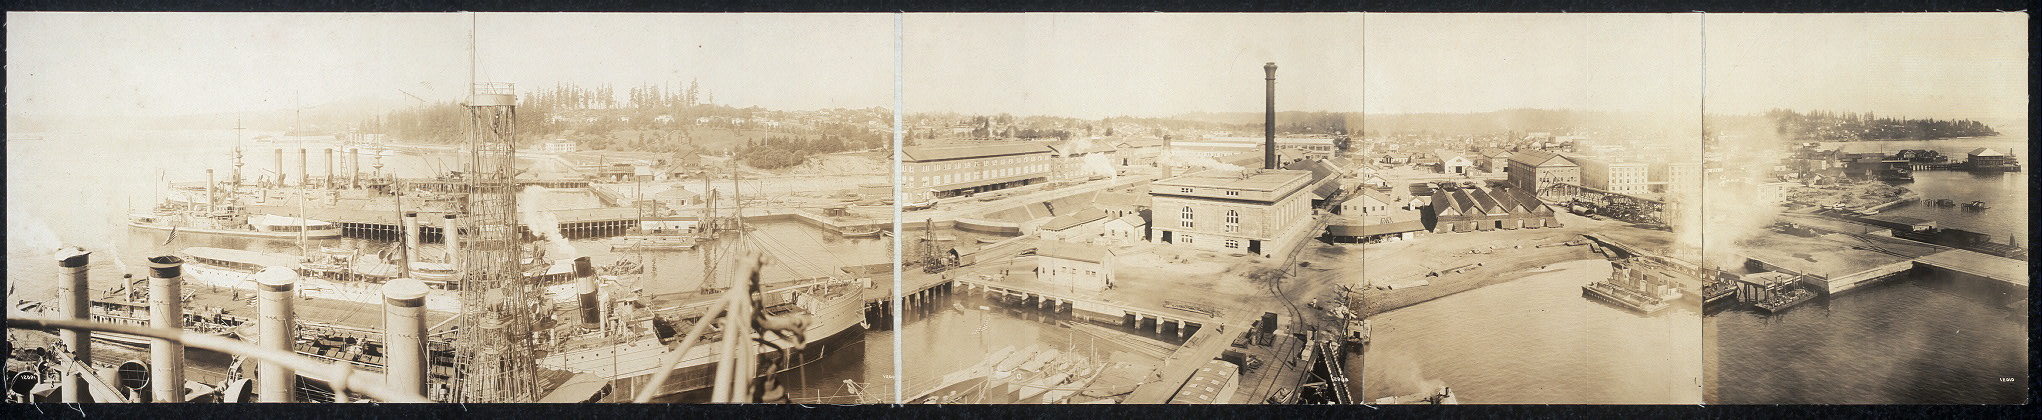 Bremerton Navy Yard views circa 1913